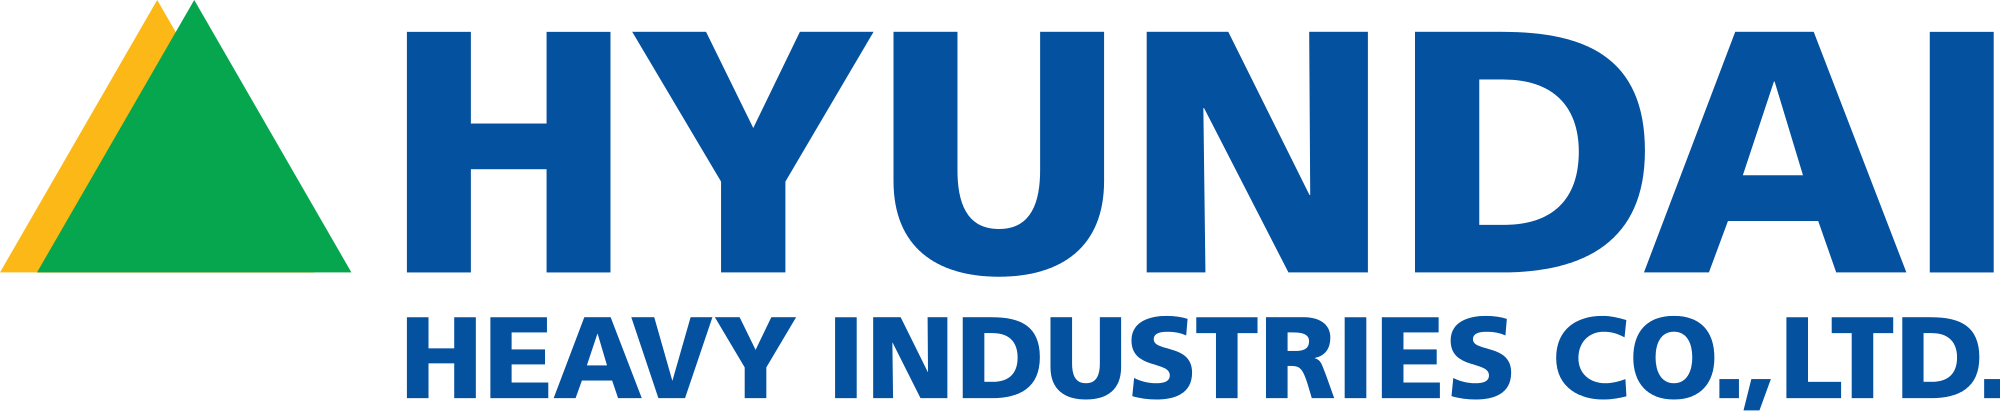 Hyundai_Heavy_Industries_logo_(english).svg